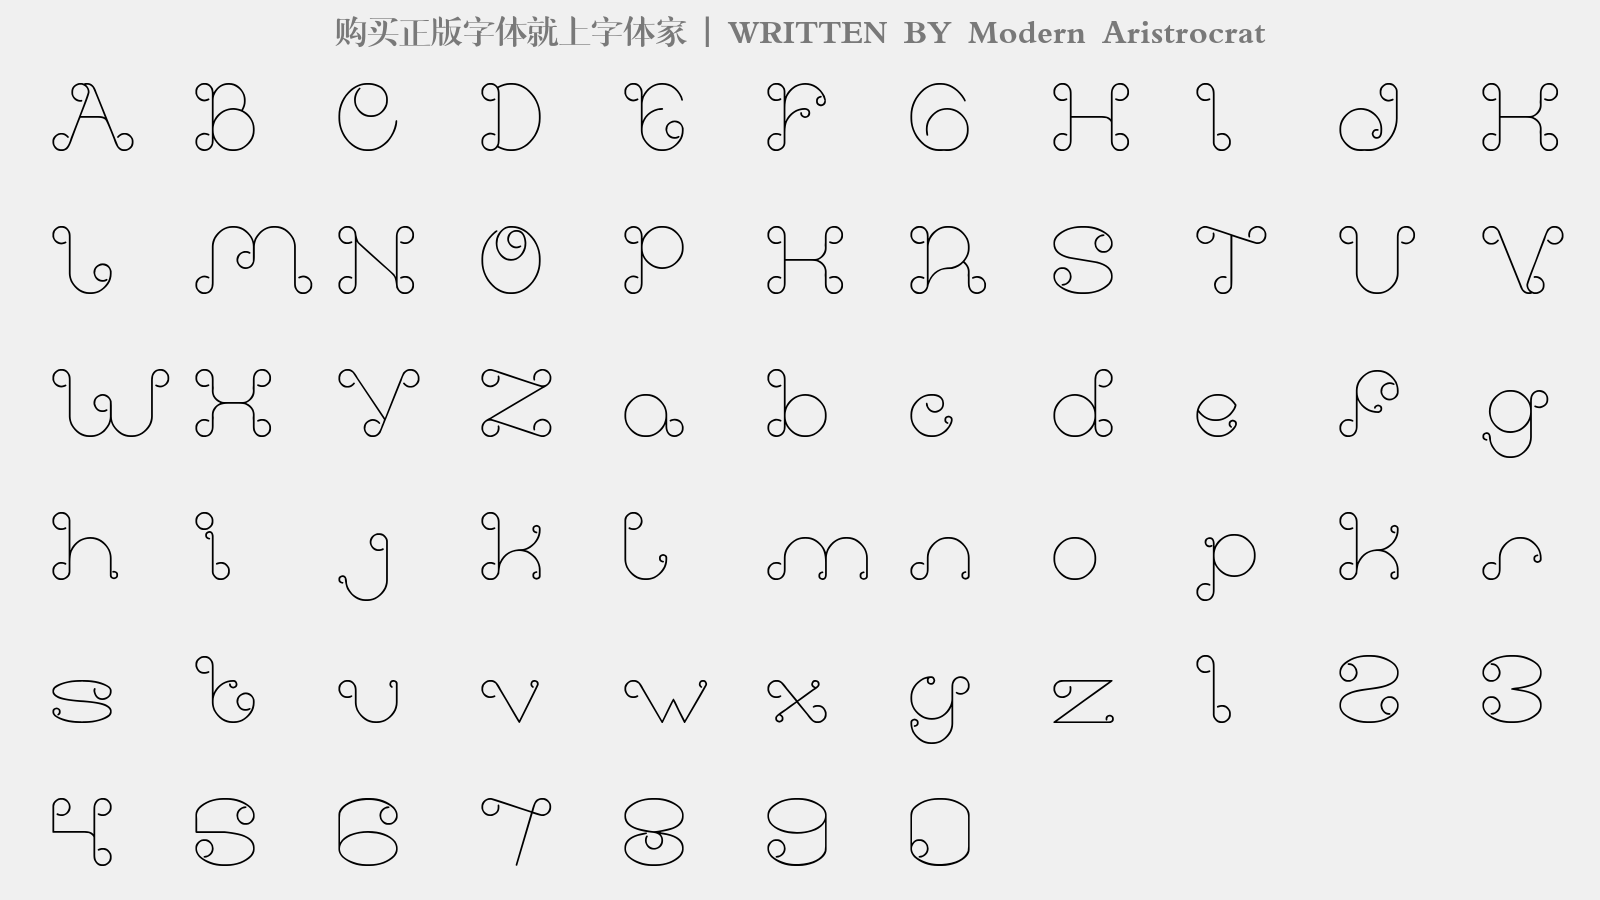 Modern Aristrocrat - 大写字母/小写字母/数字